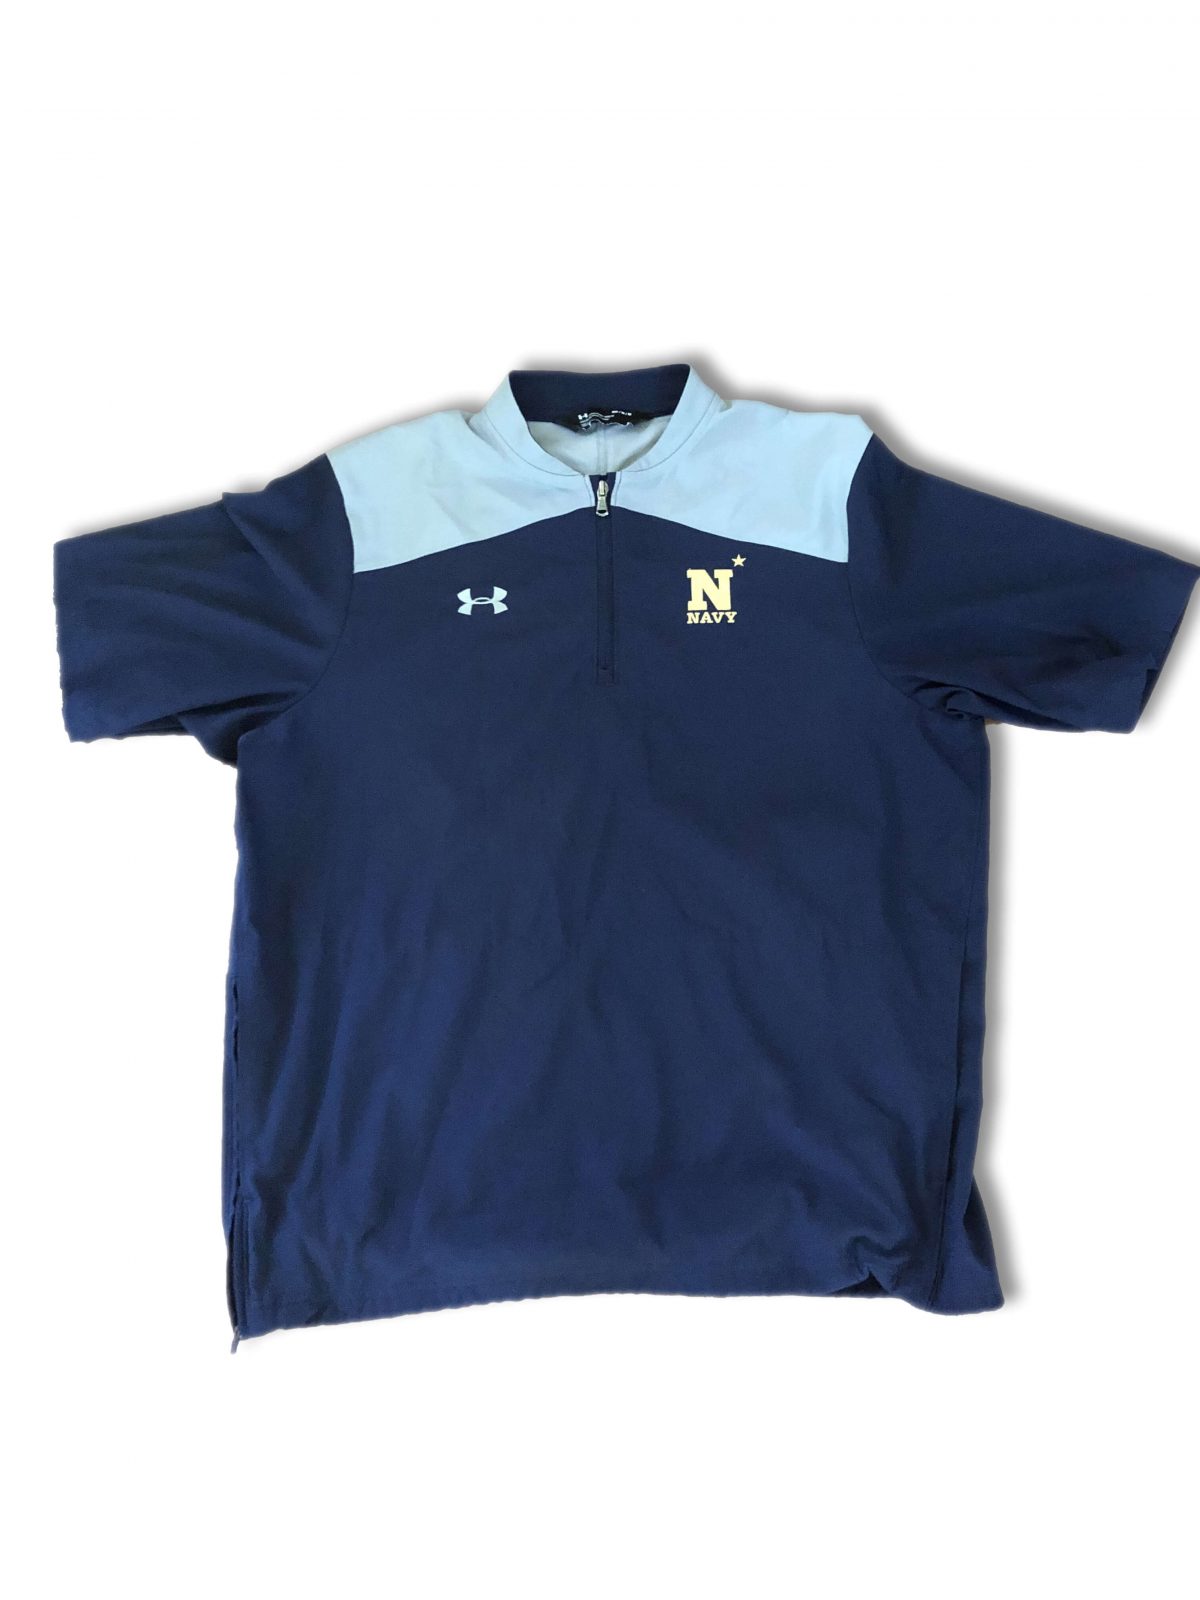 US Naval Academy BP Top : NARP Clothing